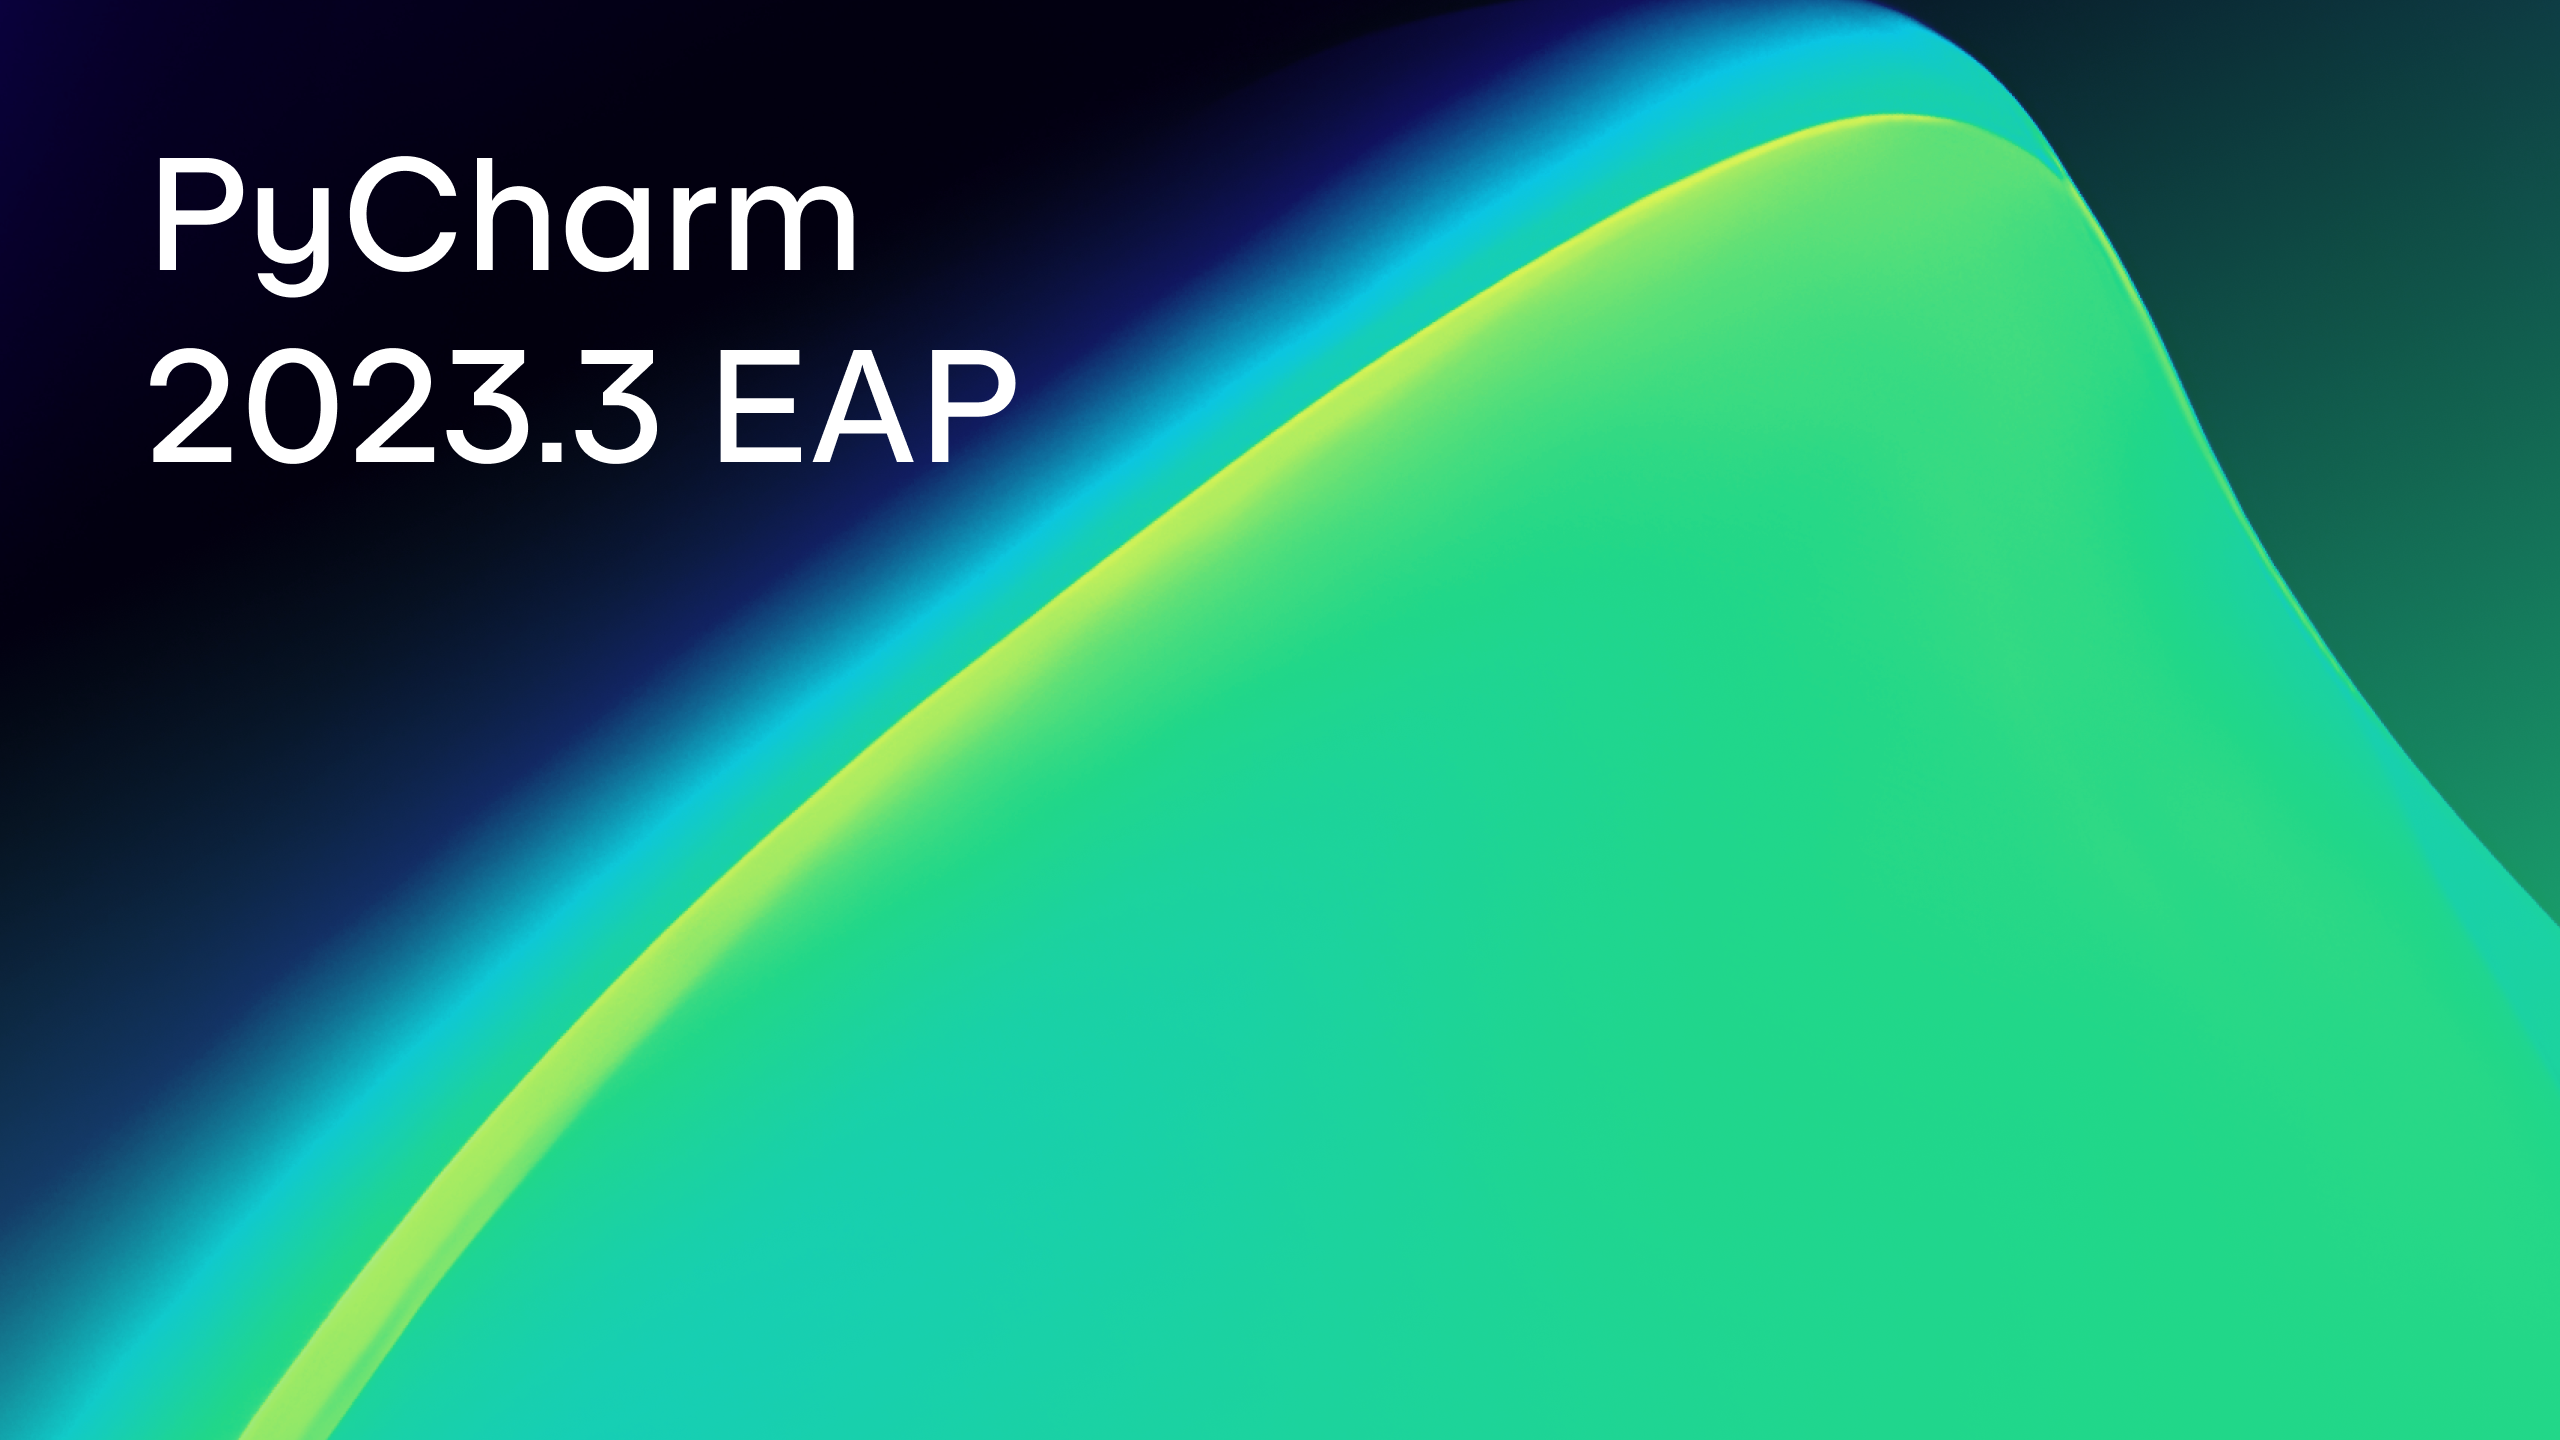 PyCharm 2023.3 Early Access Program